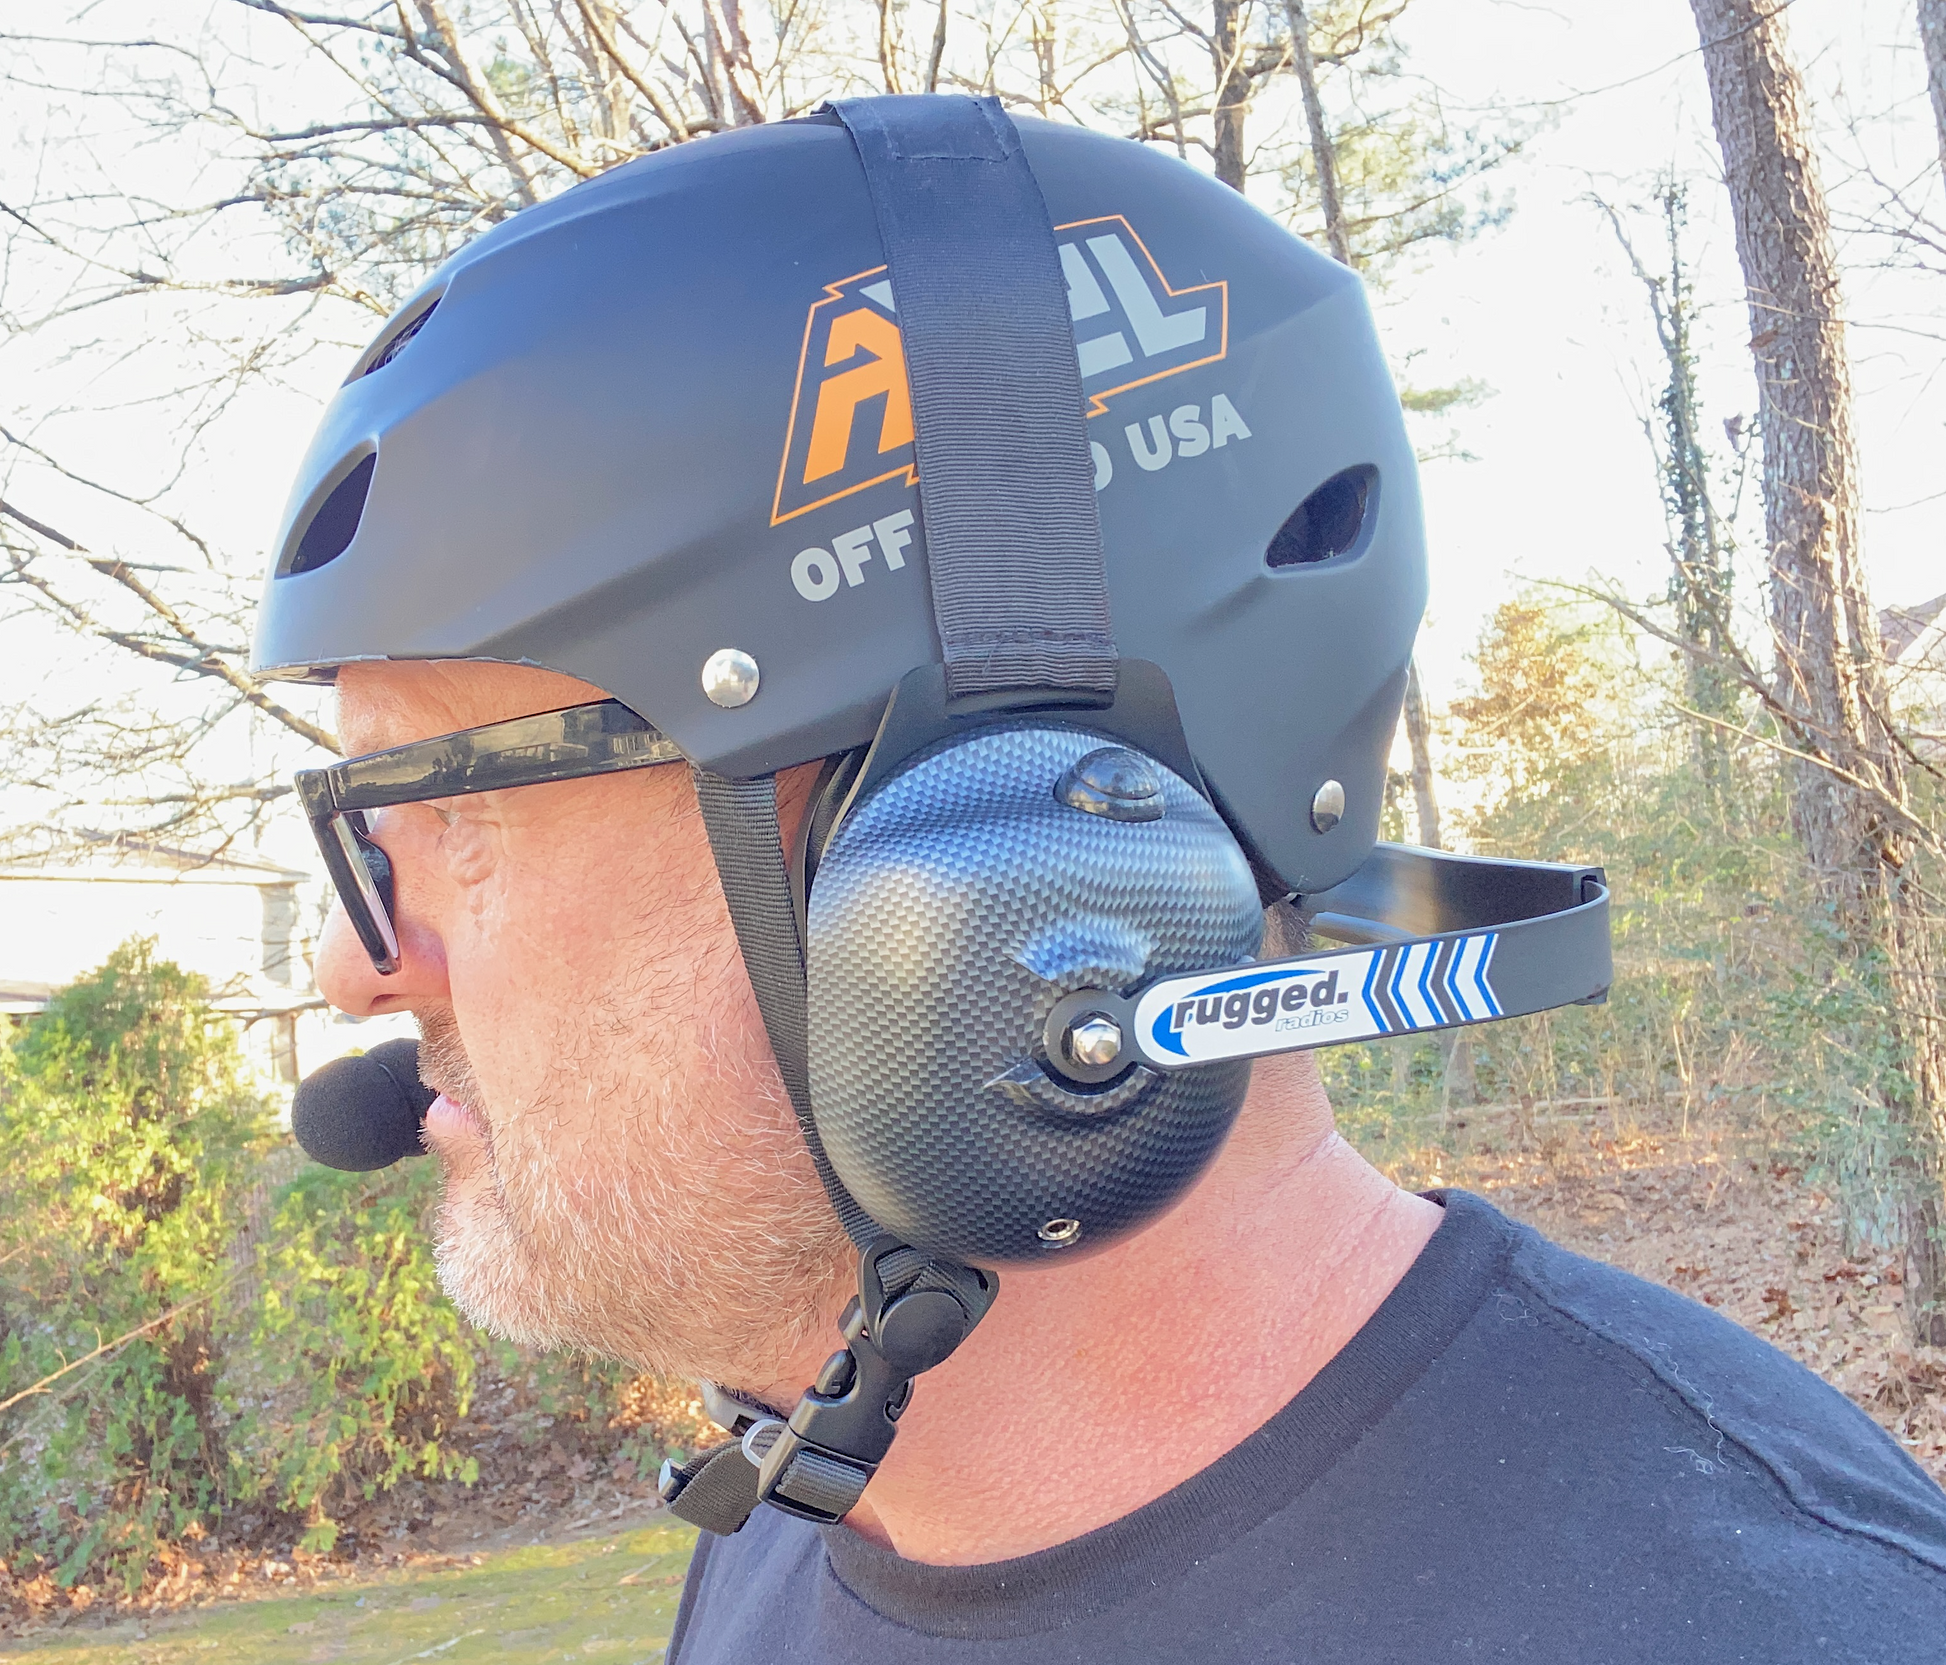 Matte Black Off Roading Helmet with an intercom headset